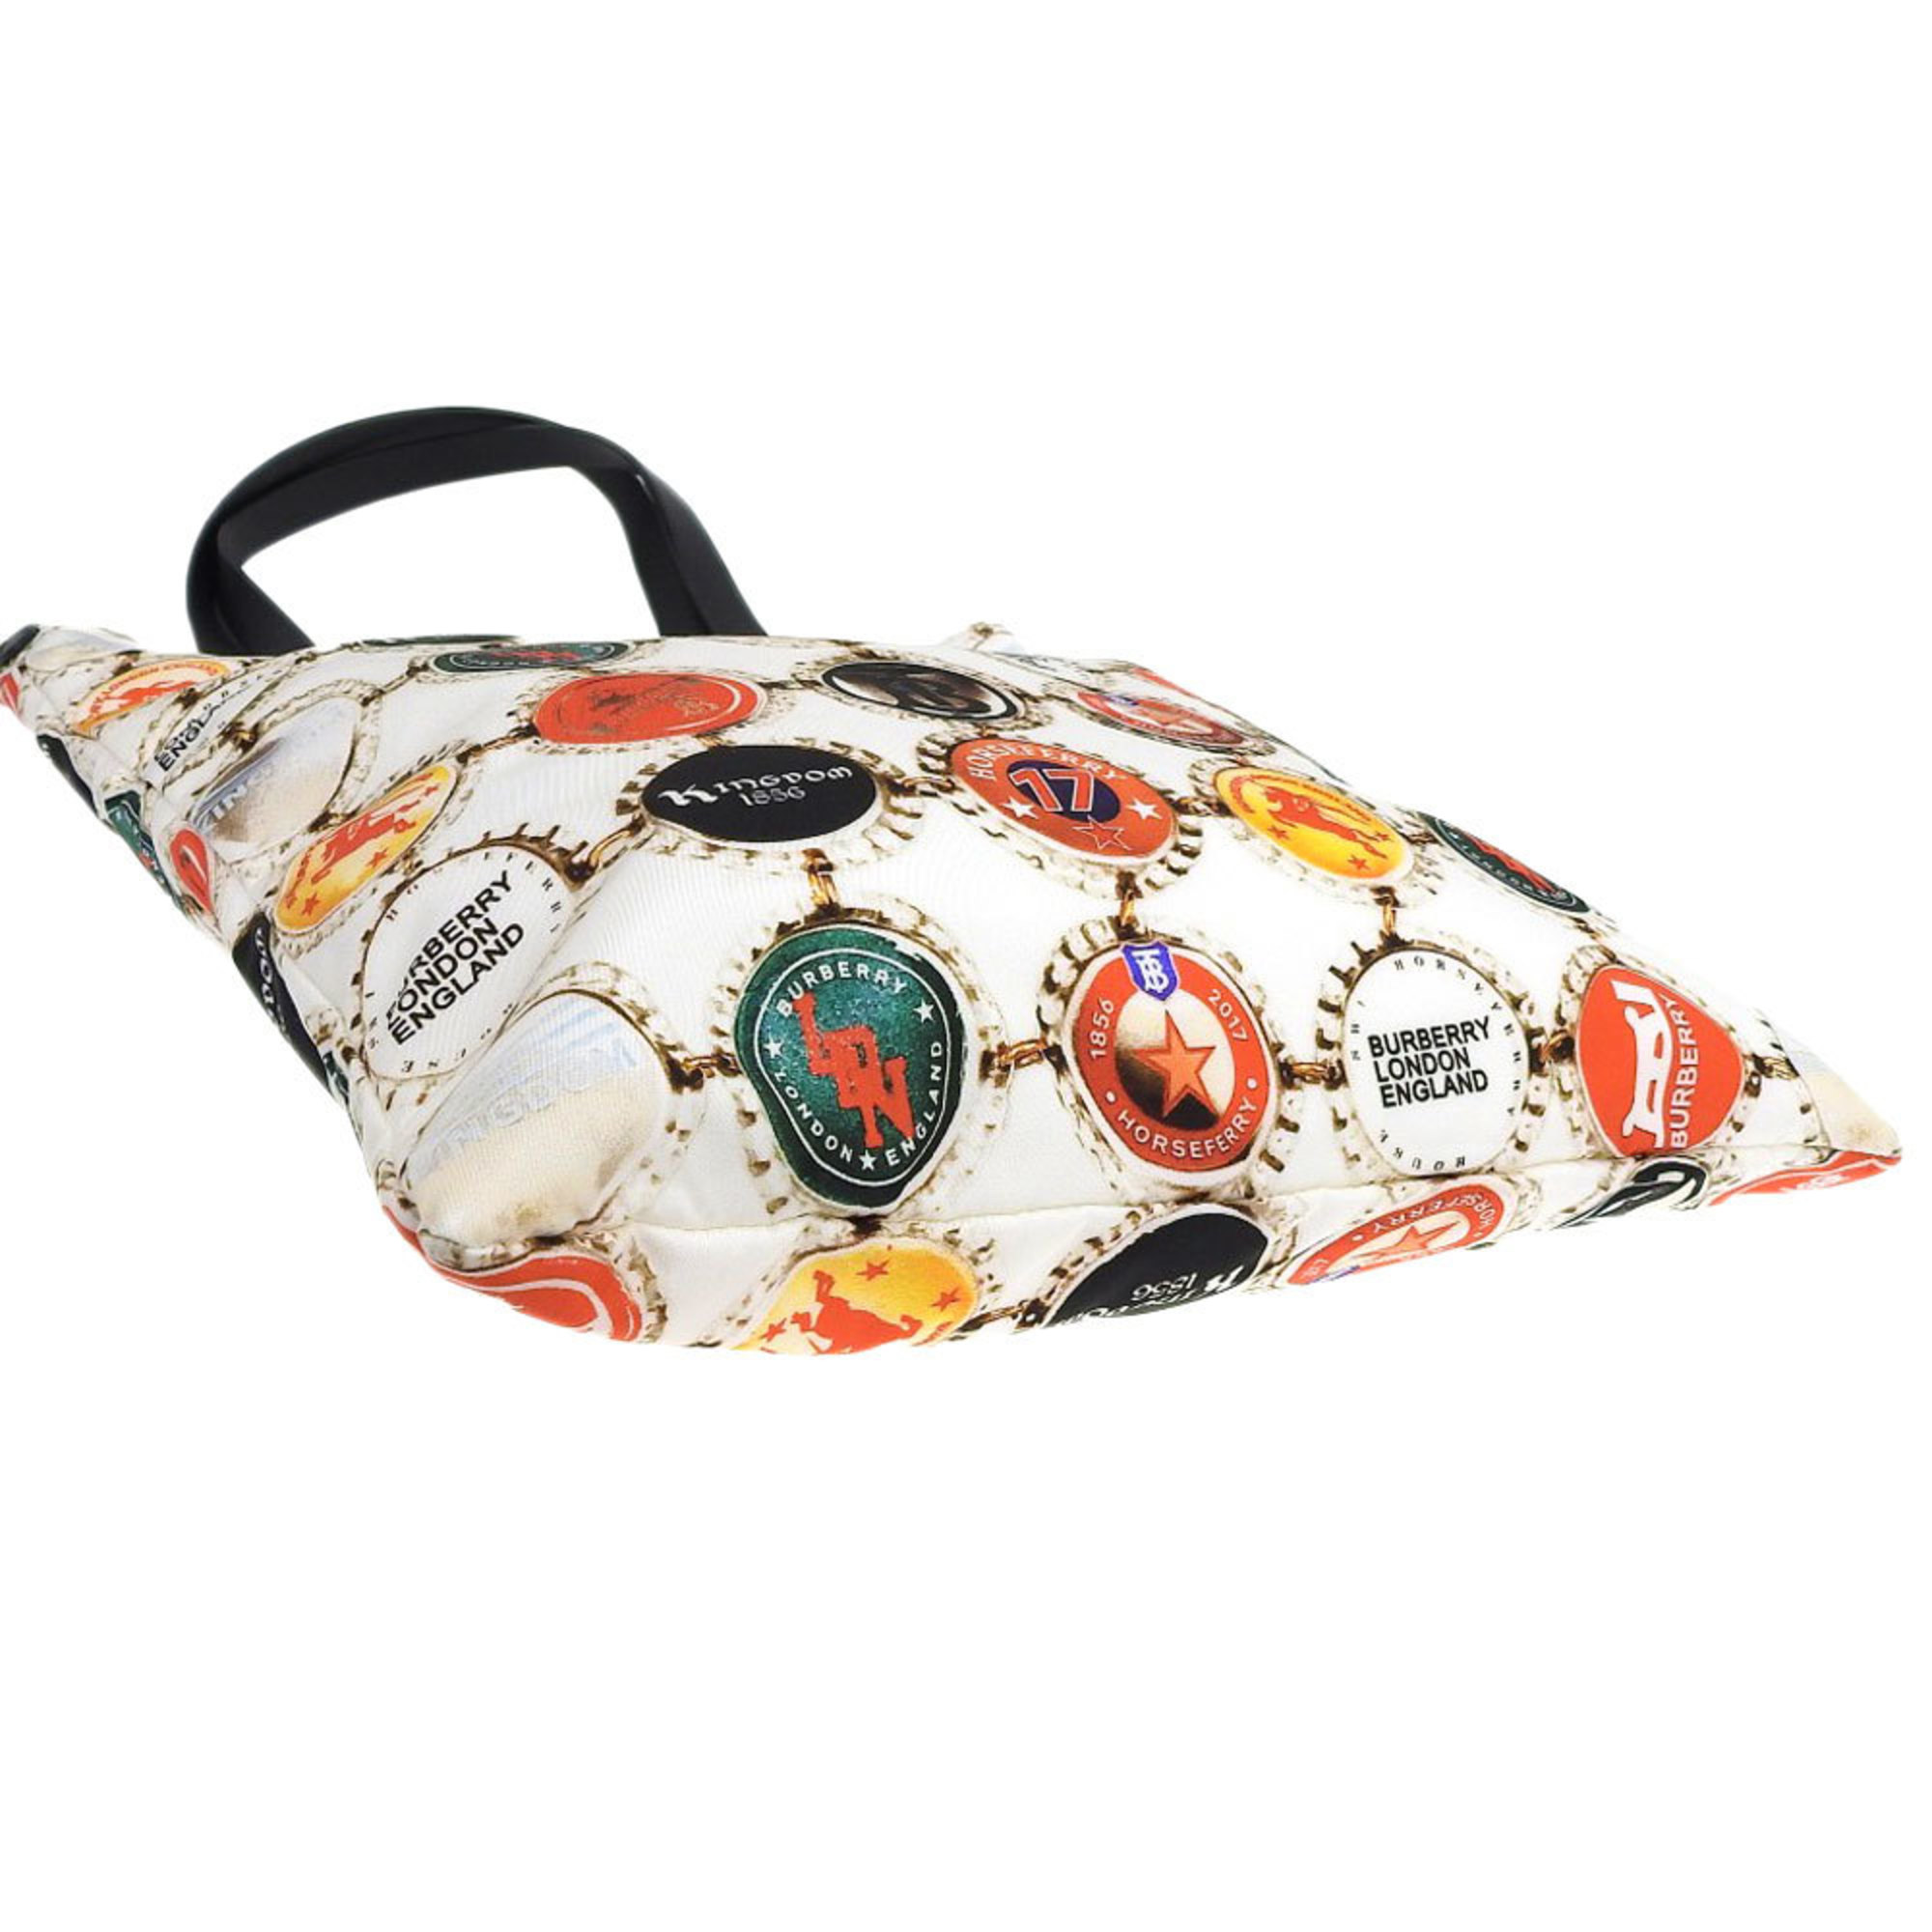 Burberry BURBERRY bottle cap pattern tote bag handbag nylon multicolor 8022365